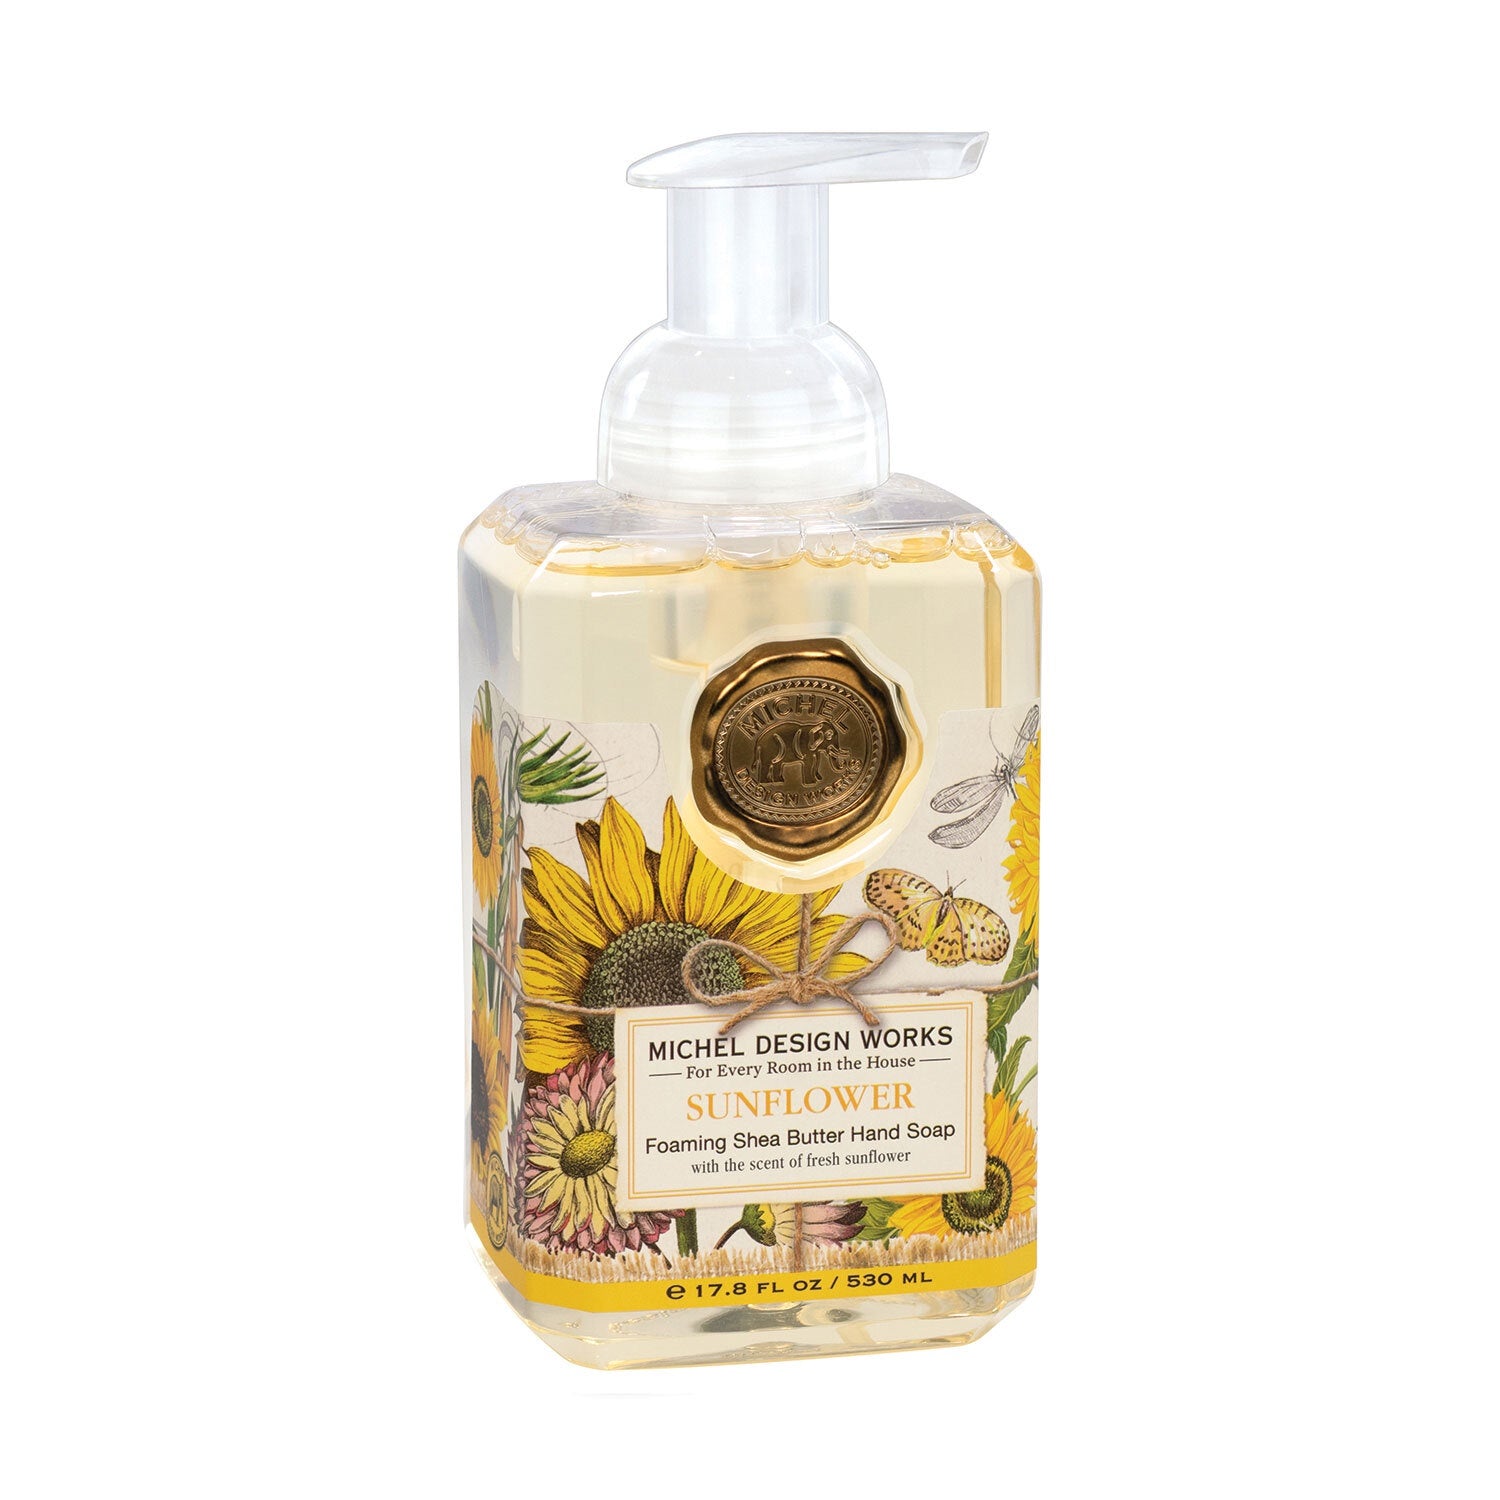 MDW Foaming Hand Soap Sunflower 530mL